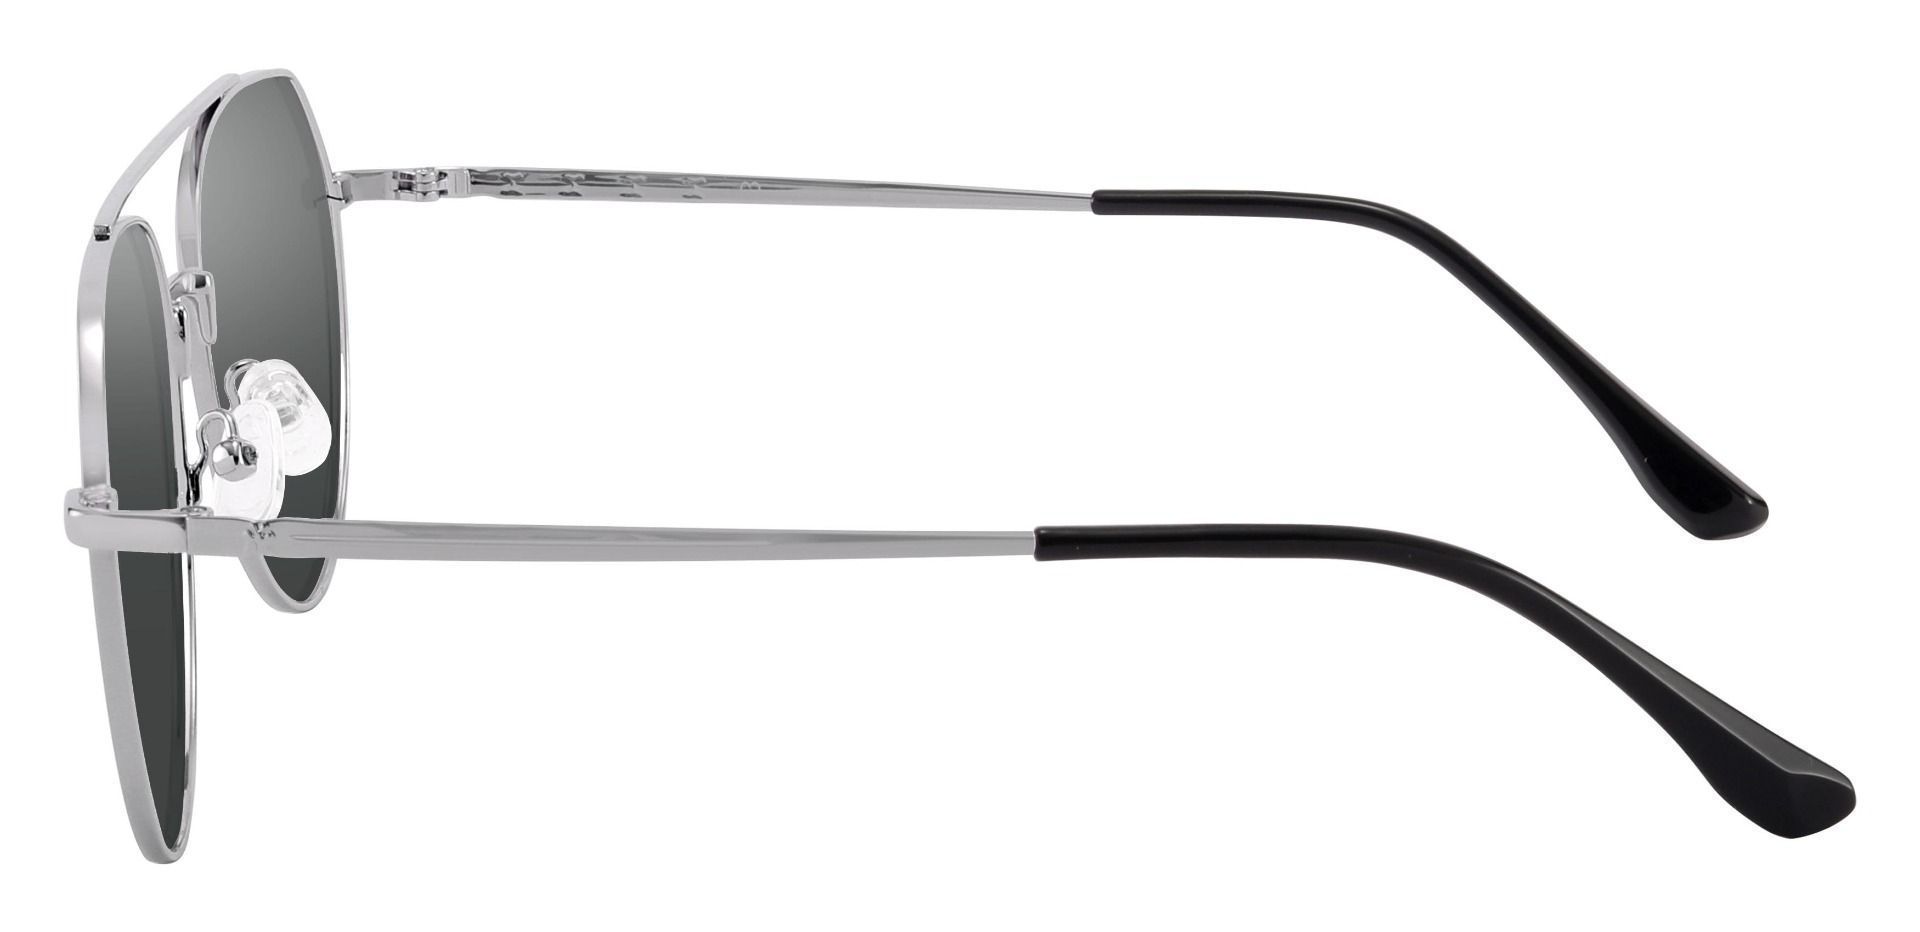 Wexford Aviator Prescription Sunglasses - Silver Frame With Gray Lenses